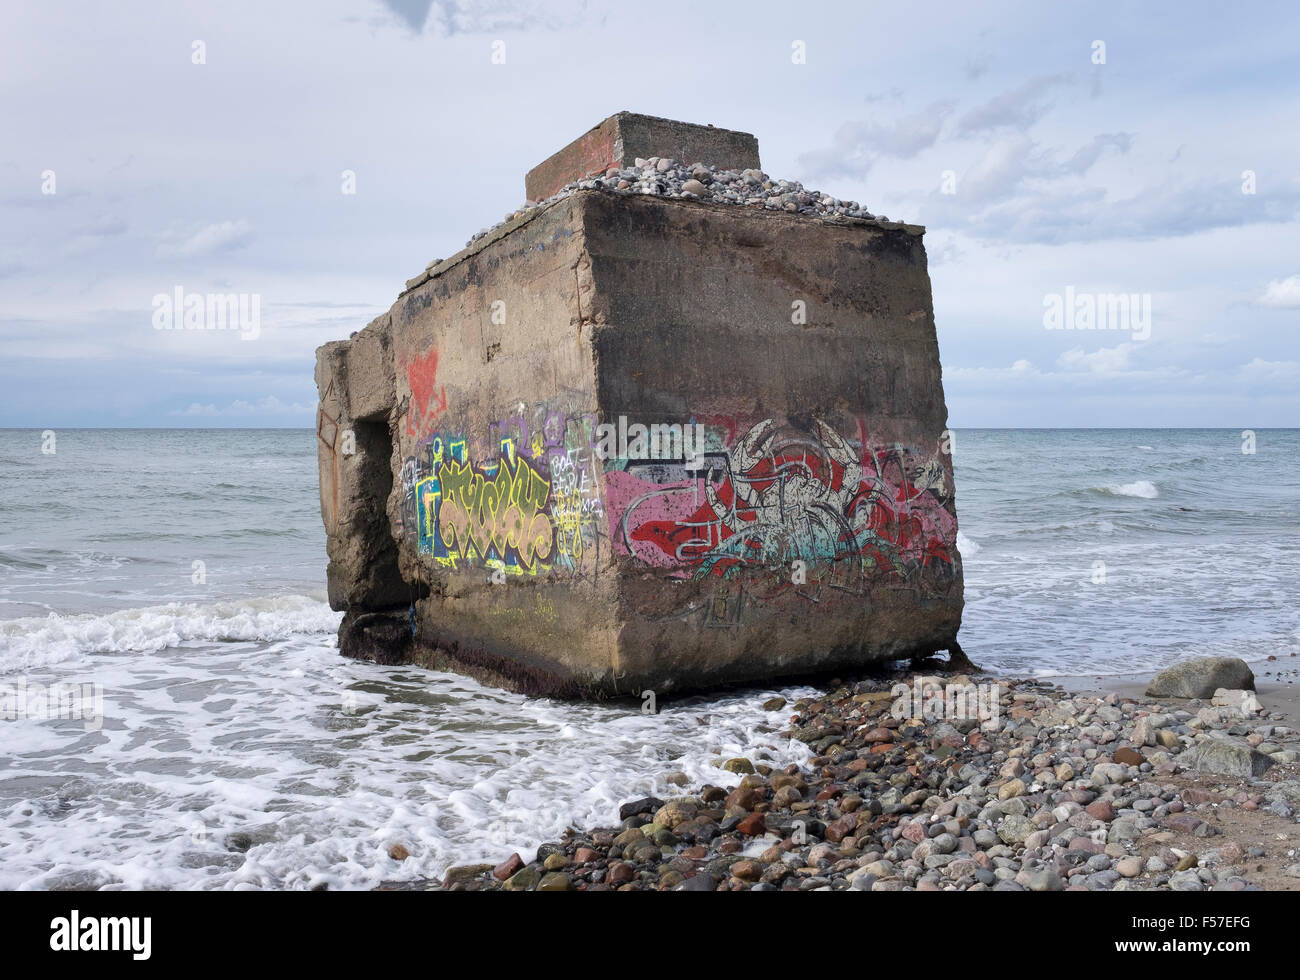 Bunker with graffiti, Hohes Ufer between Wustrow and Ahrenshoop, Fischland, Fischland-Darß-Zingst, Baltic Sea Stock Photo